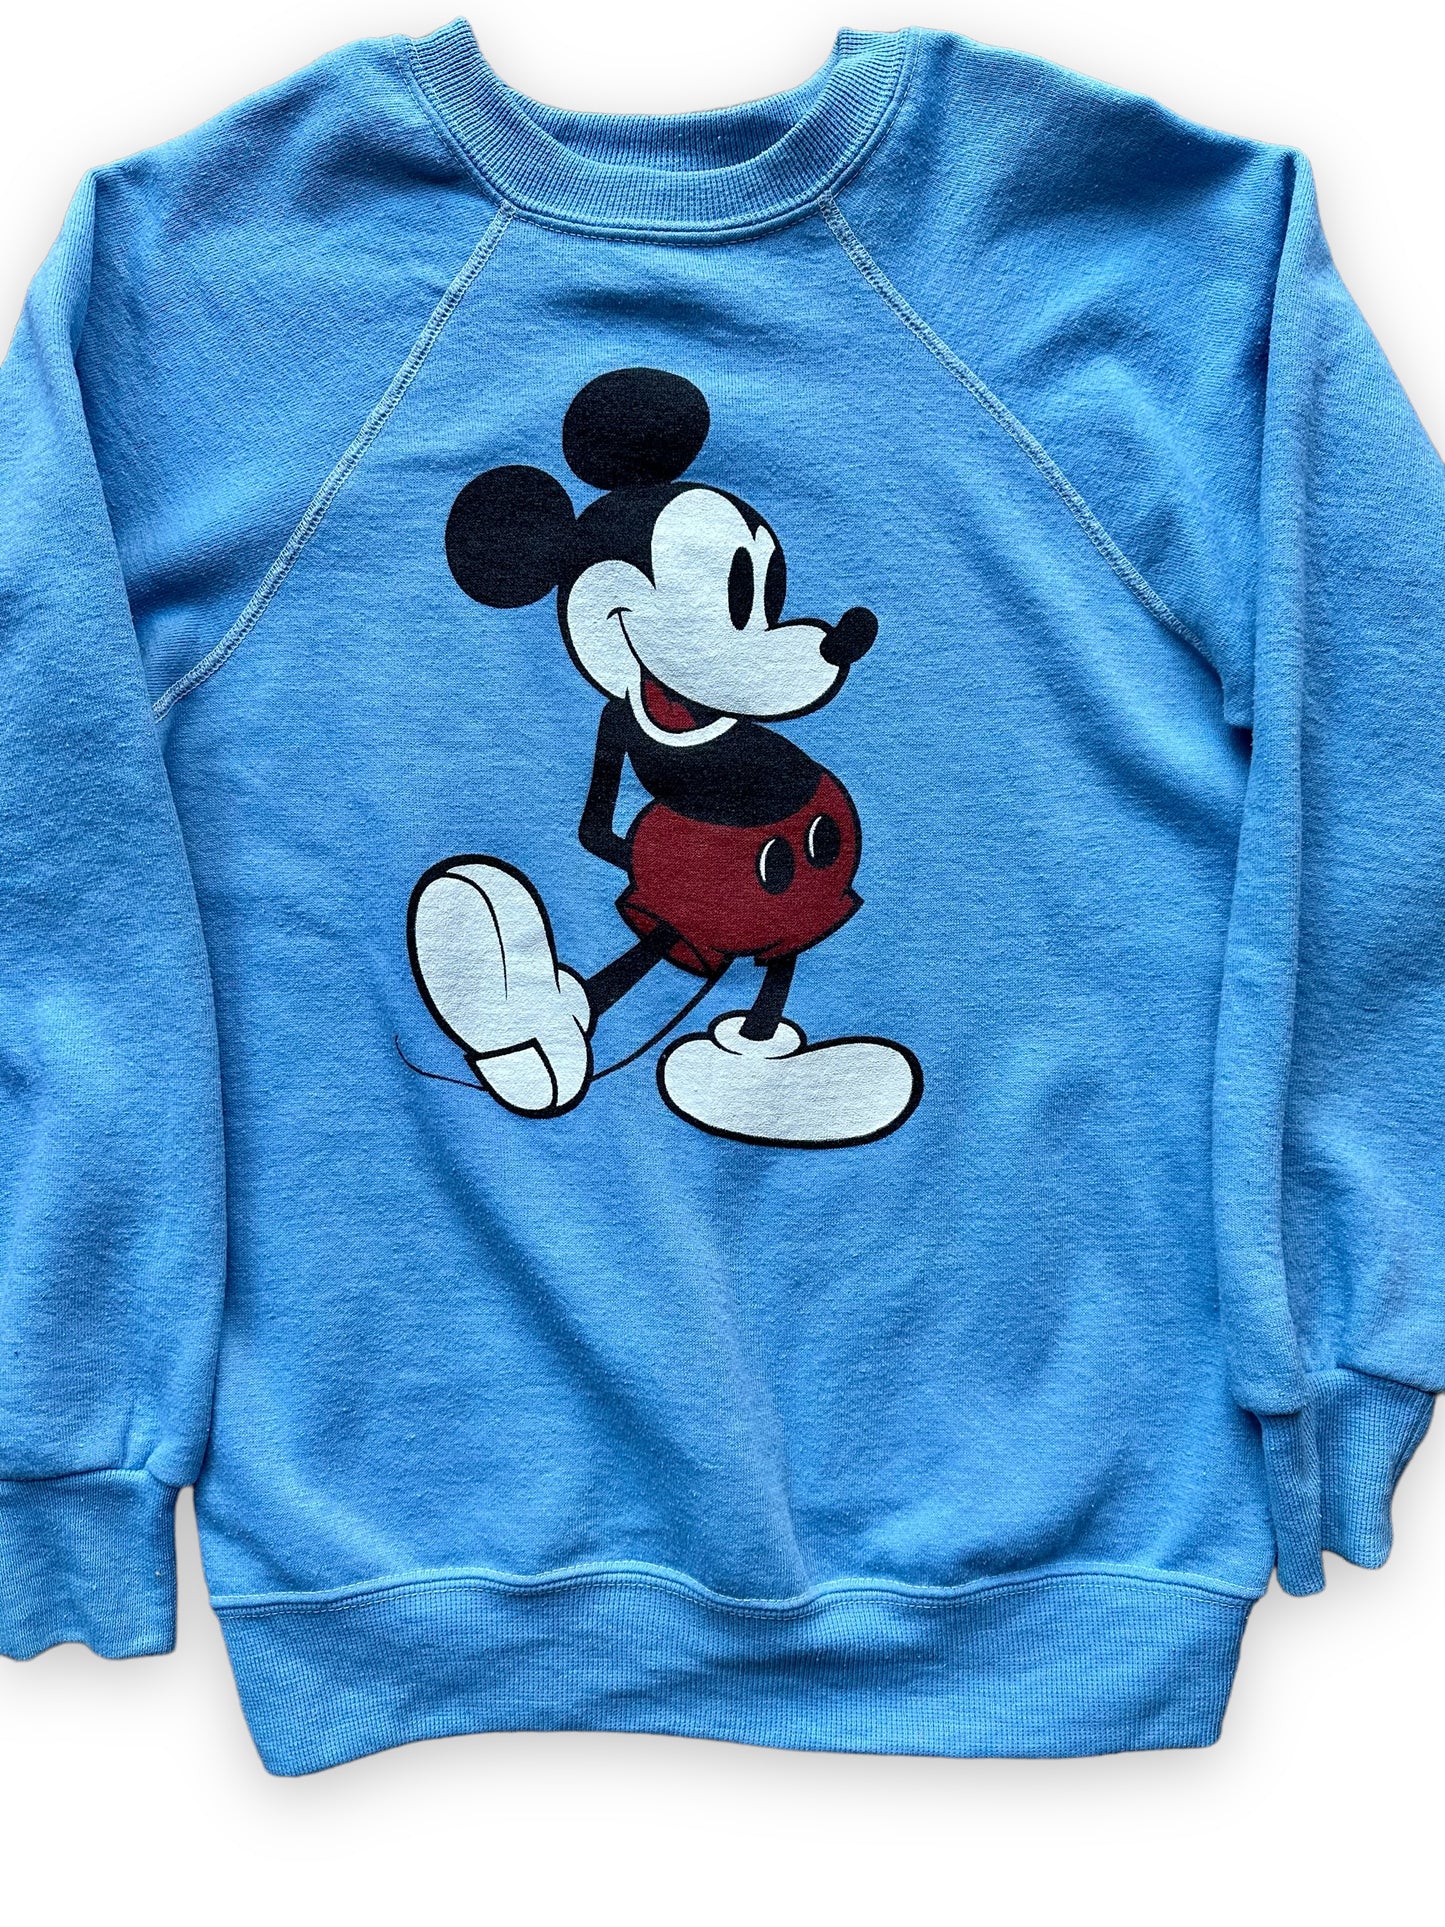 Close Up Graphic Detail on Vintage Disney Mickey Mouse Light Blue Sweatshirt SZ S | Vintage Crewneck Sweatshirt Seattle | Barn Owl Vintage Seattle